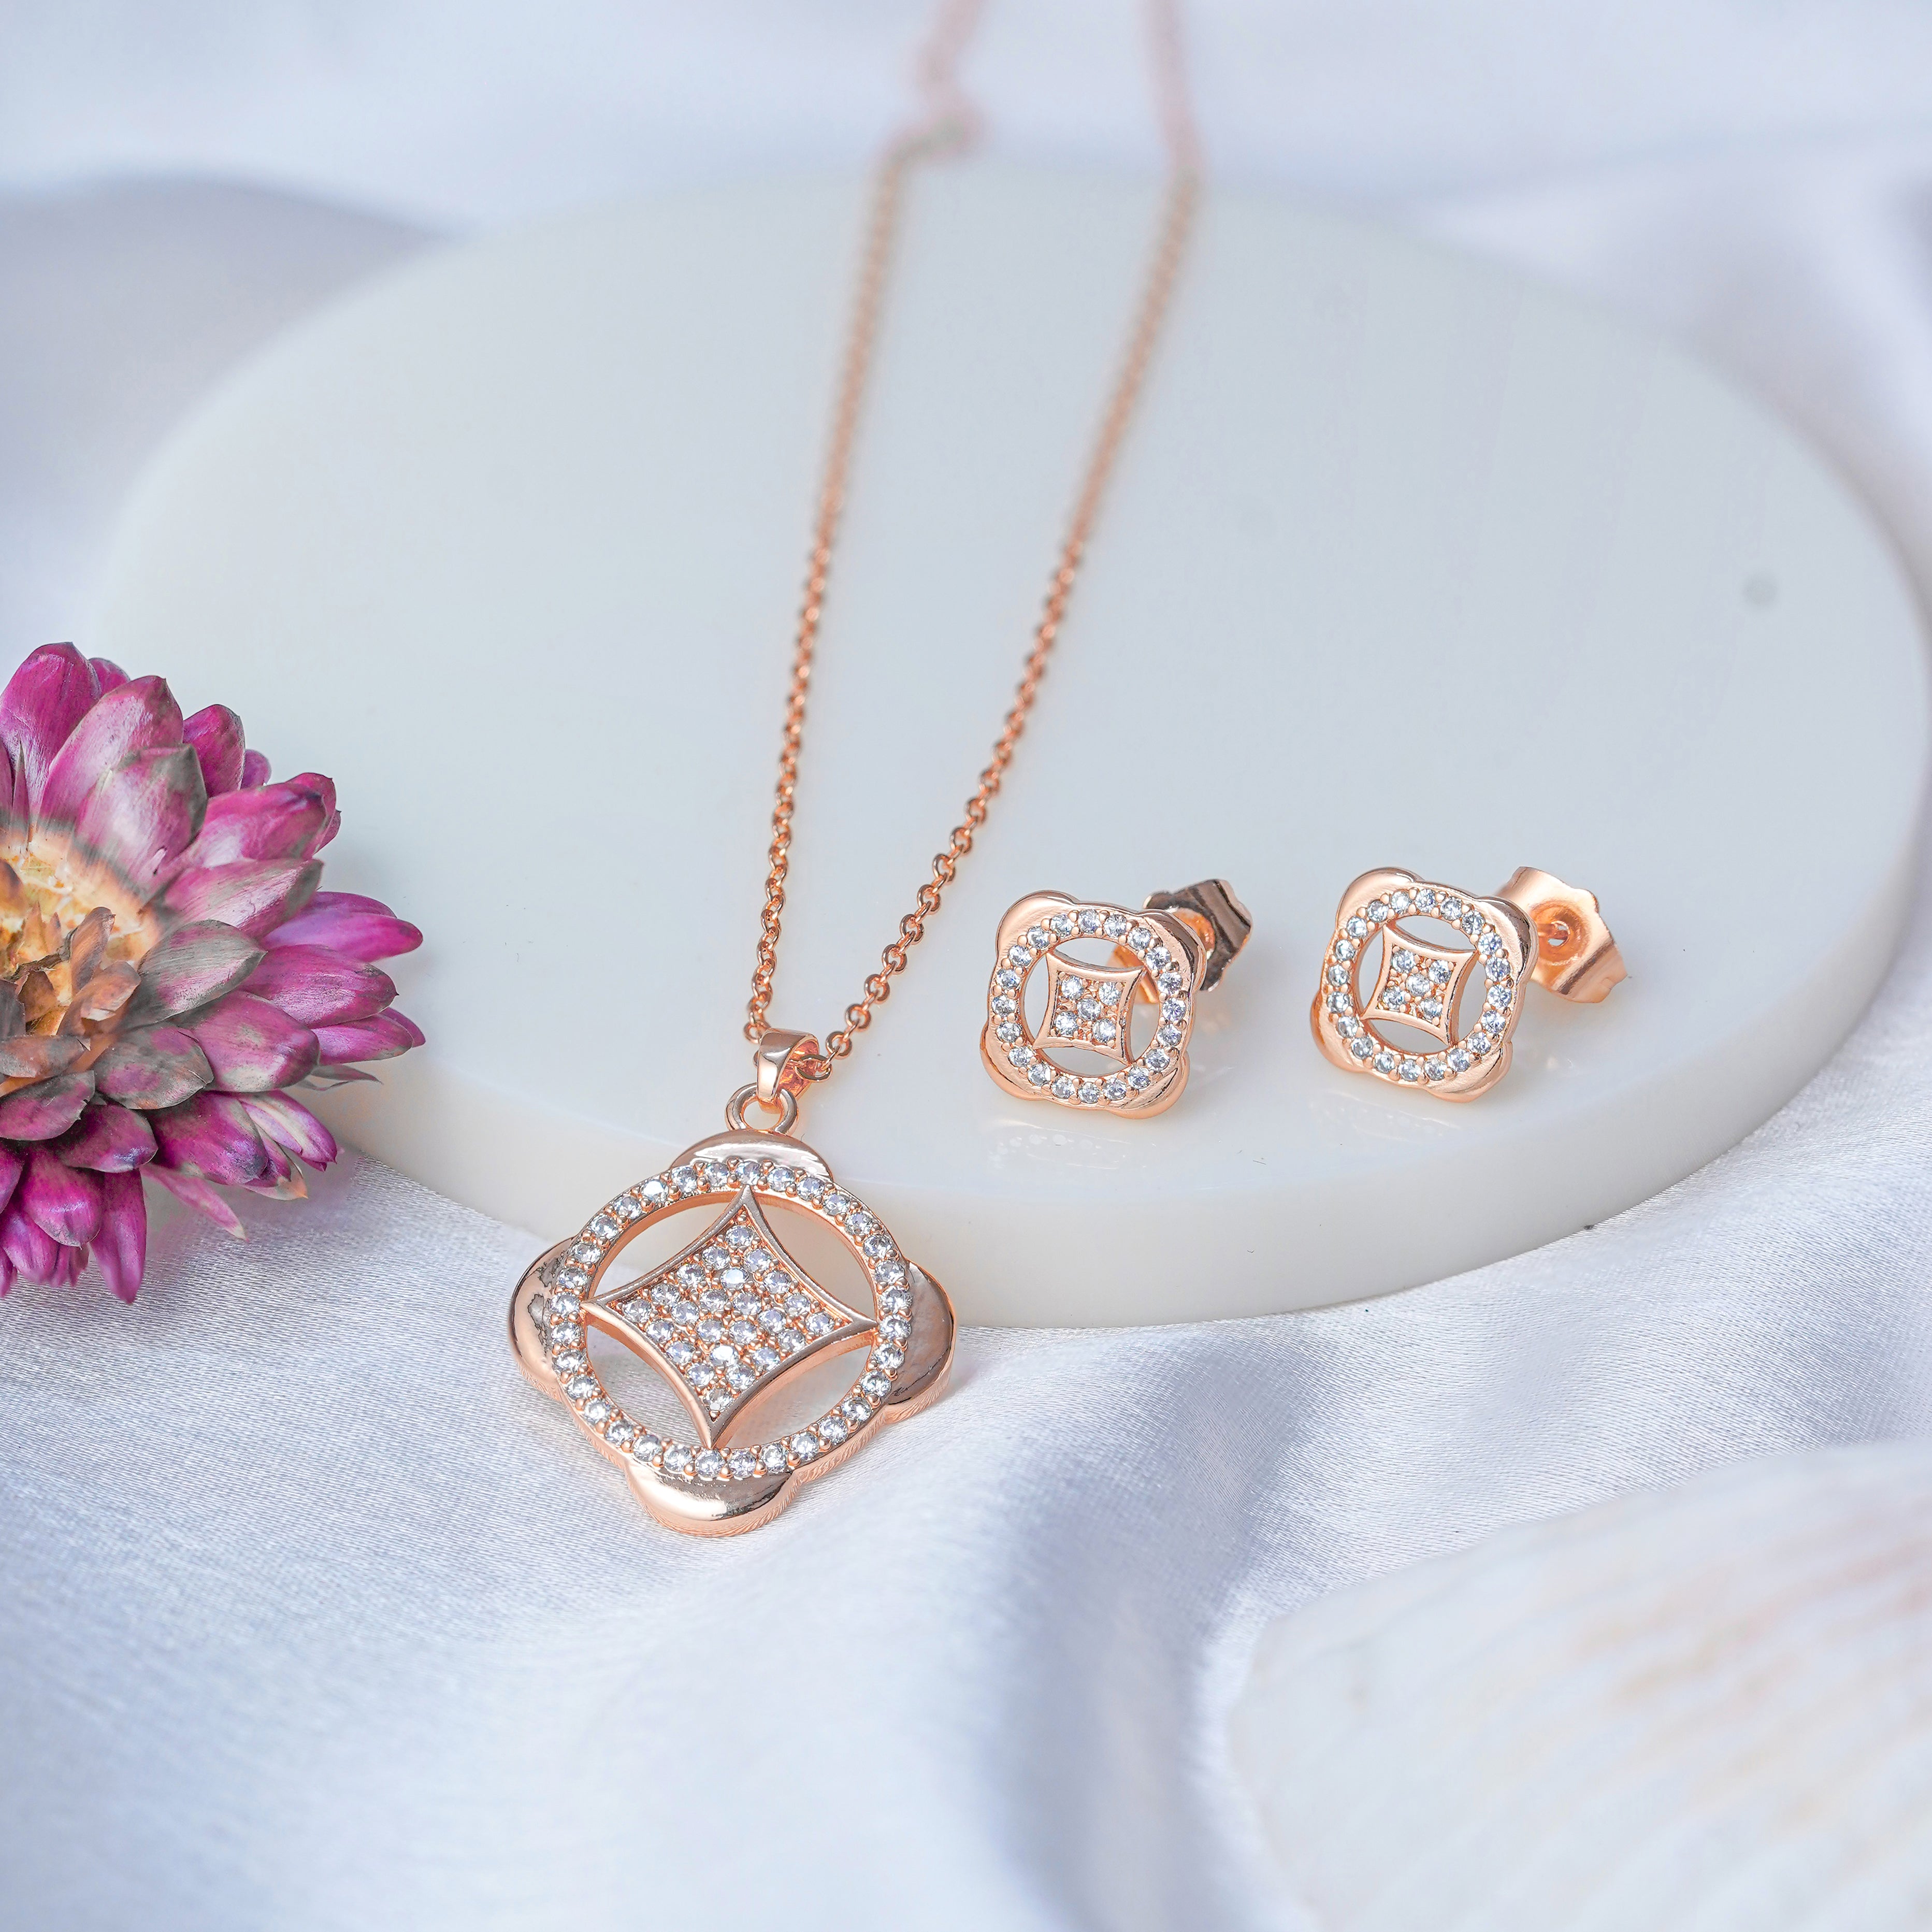 Jewelsium Rose Gold Designer Chain Pendant Set: Timeless Sophistication Defined